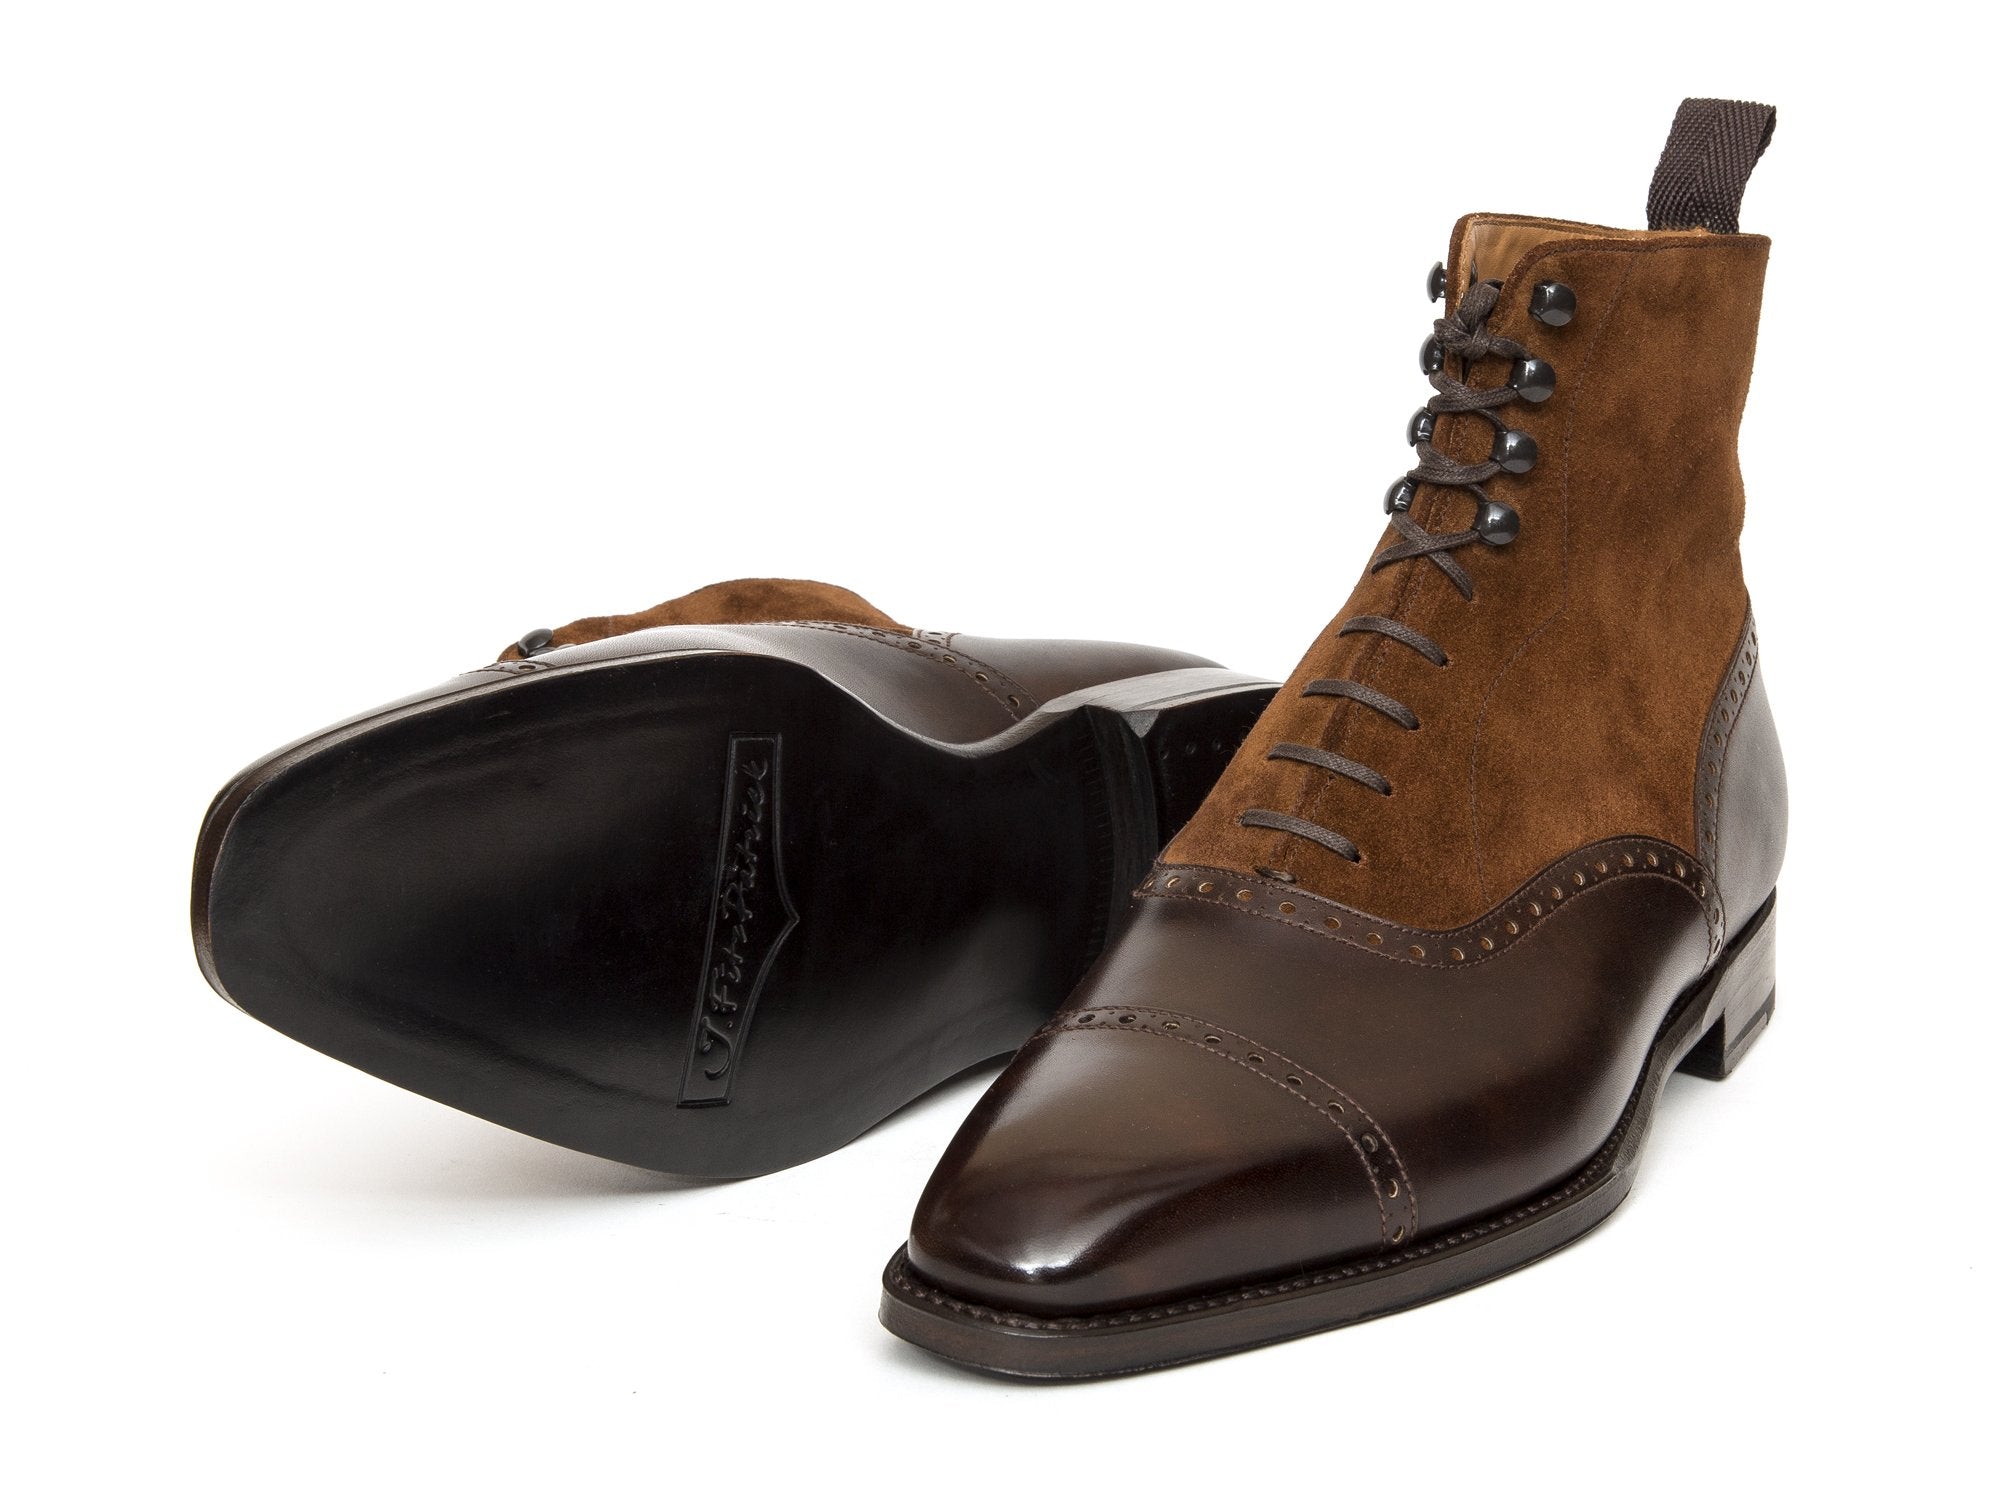 J.FitzPatrick Footwear - David - Dark Brown Museum Calf / Snuff Suede - LPB Last - Single Leather Sole